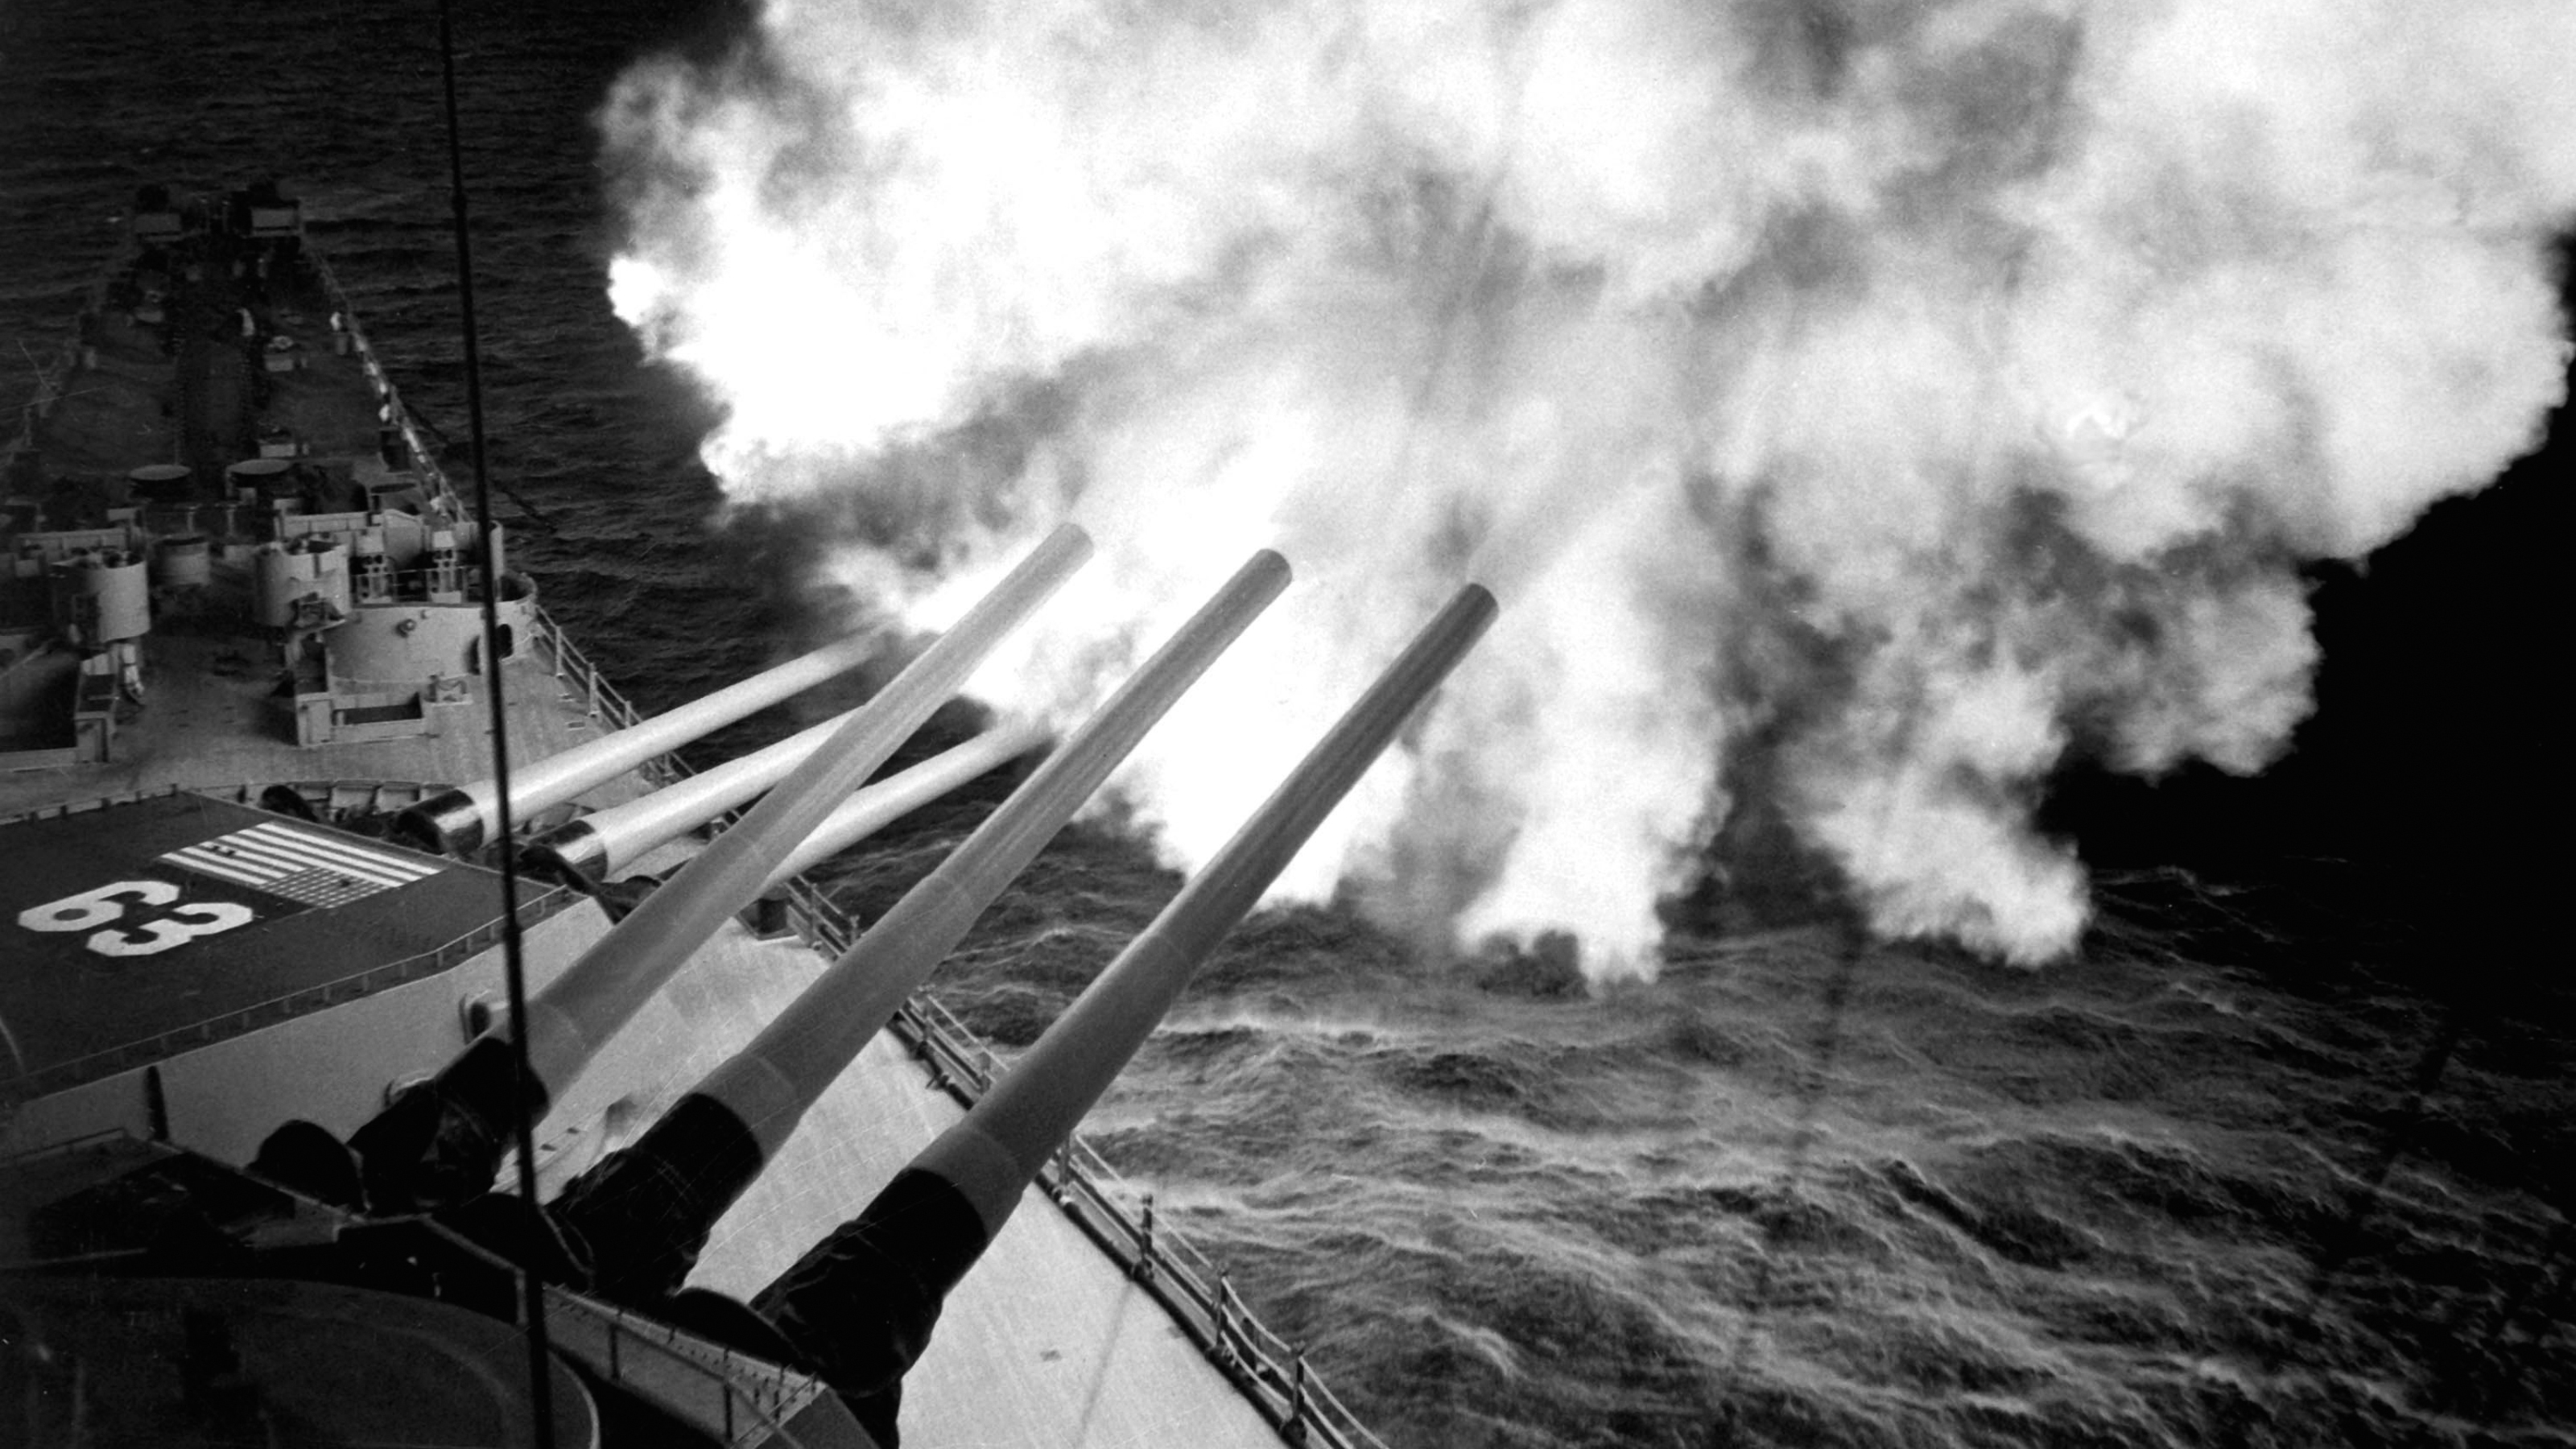 General 3200x1800 military ship United States Navy World War II history cannons monochrome Battleships